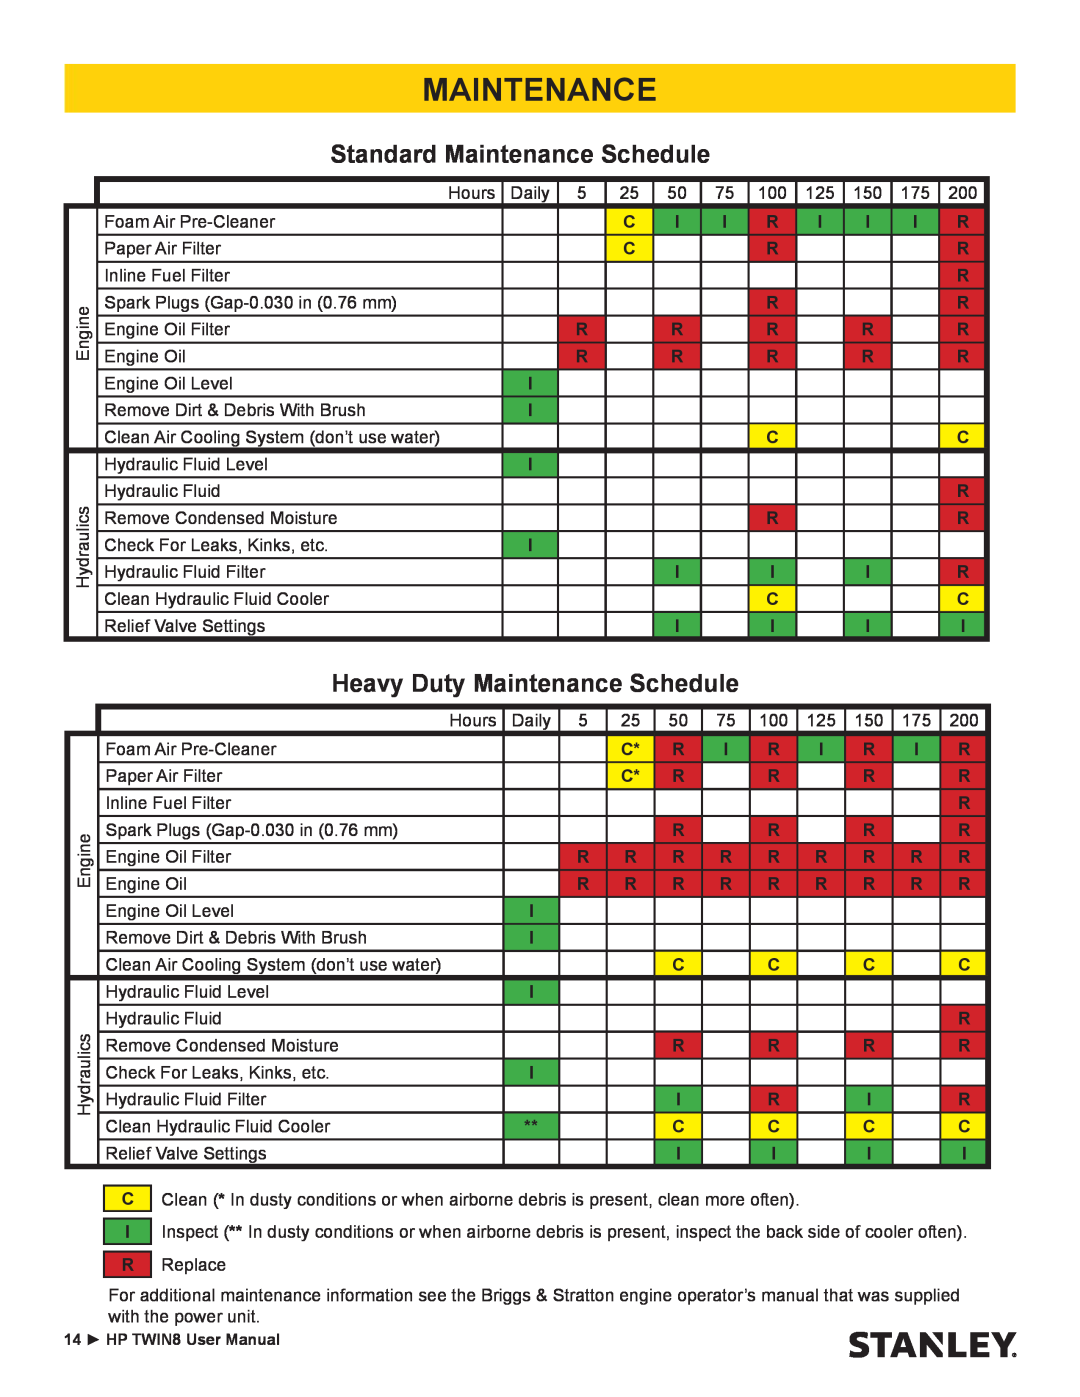 Stanley Black & Decker HP TWIN8 Standard Maintenance Schedule, Heavy Duty Maintenance Schedule, Hours, Daily, Engine Oil 